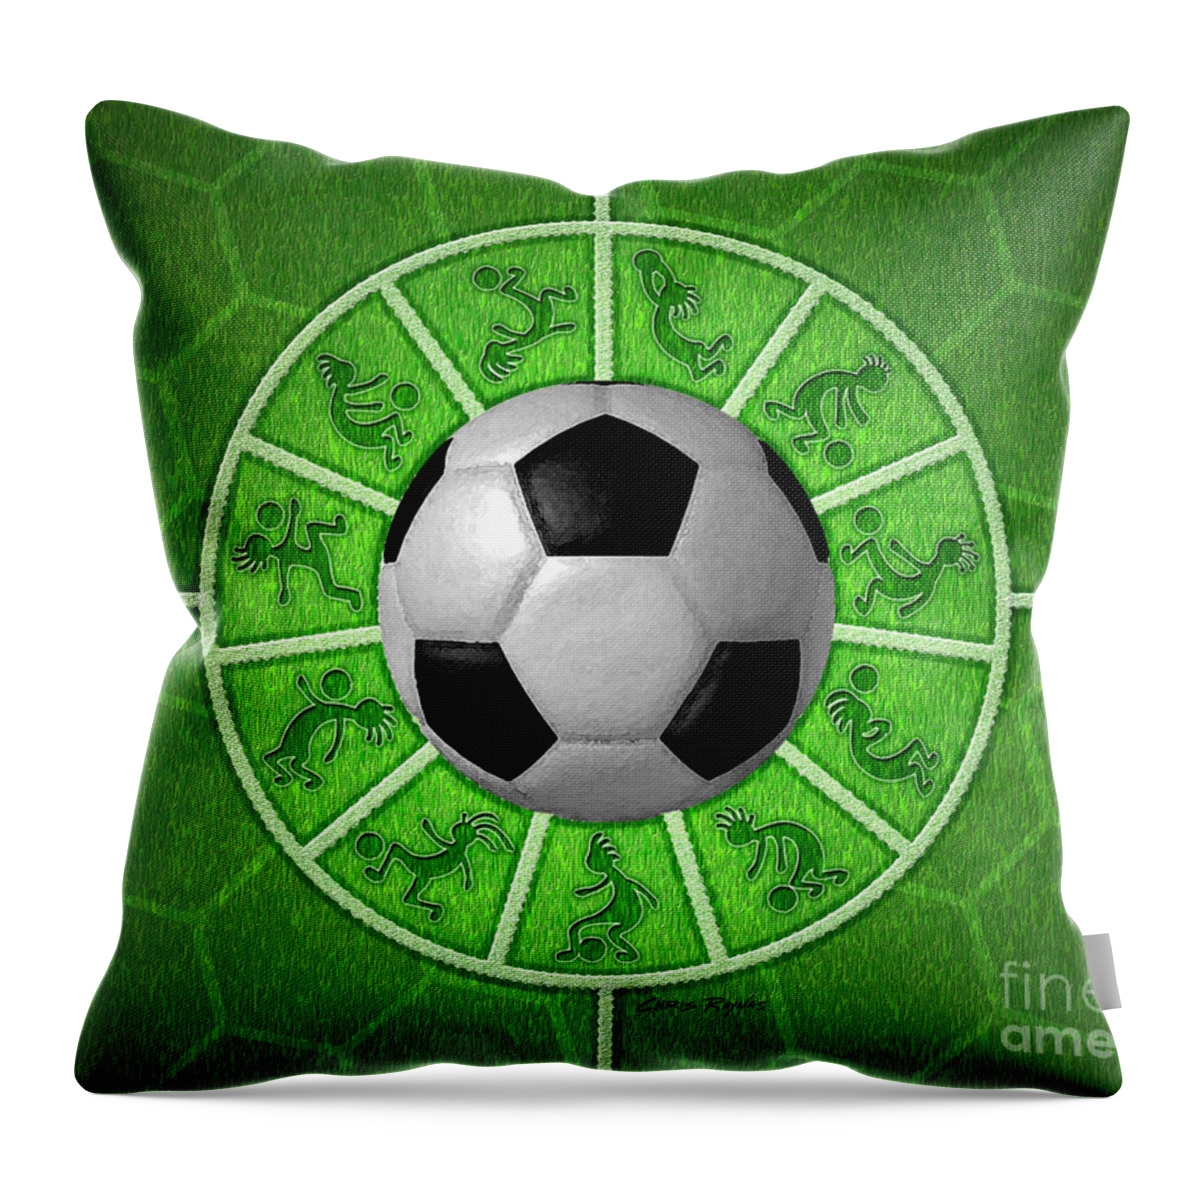 Soccer Throw Pillow featuring the digital art Kokopelli Soccer by Chris Rhynas